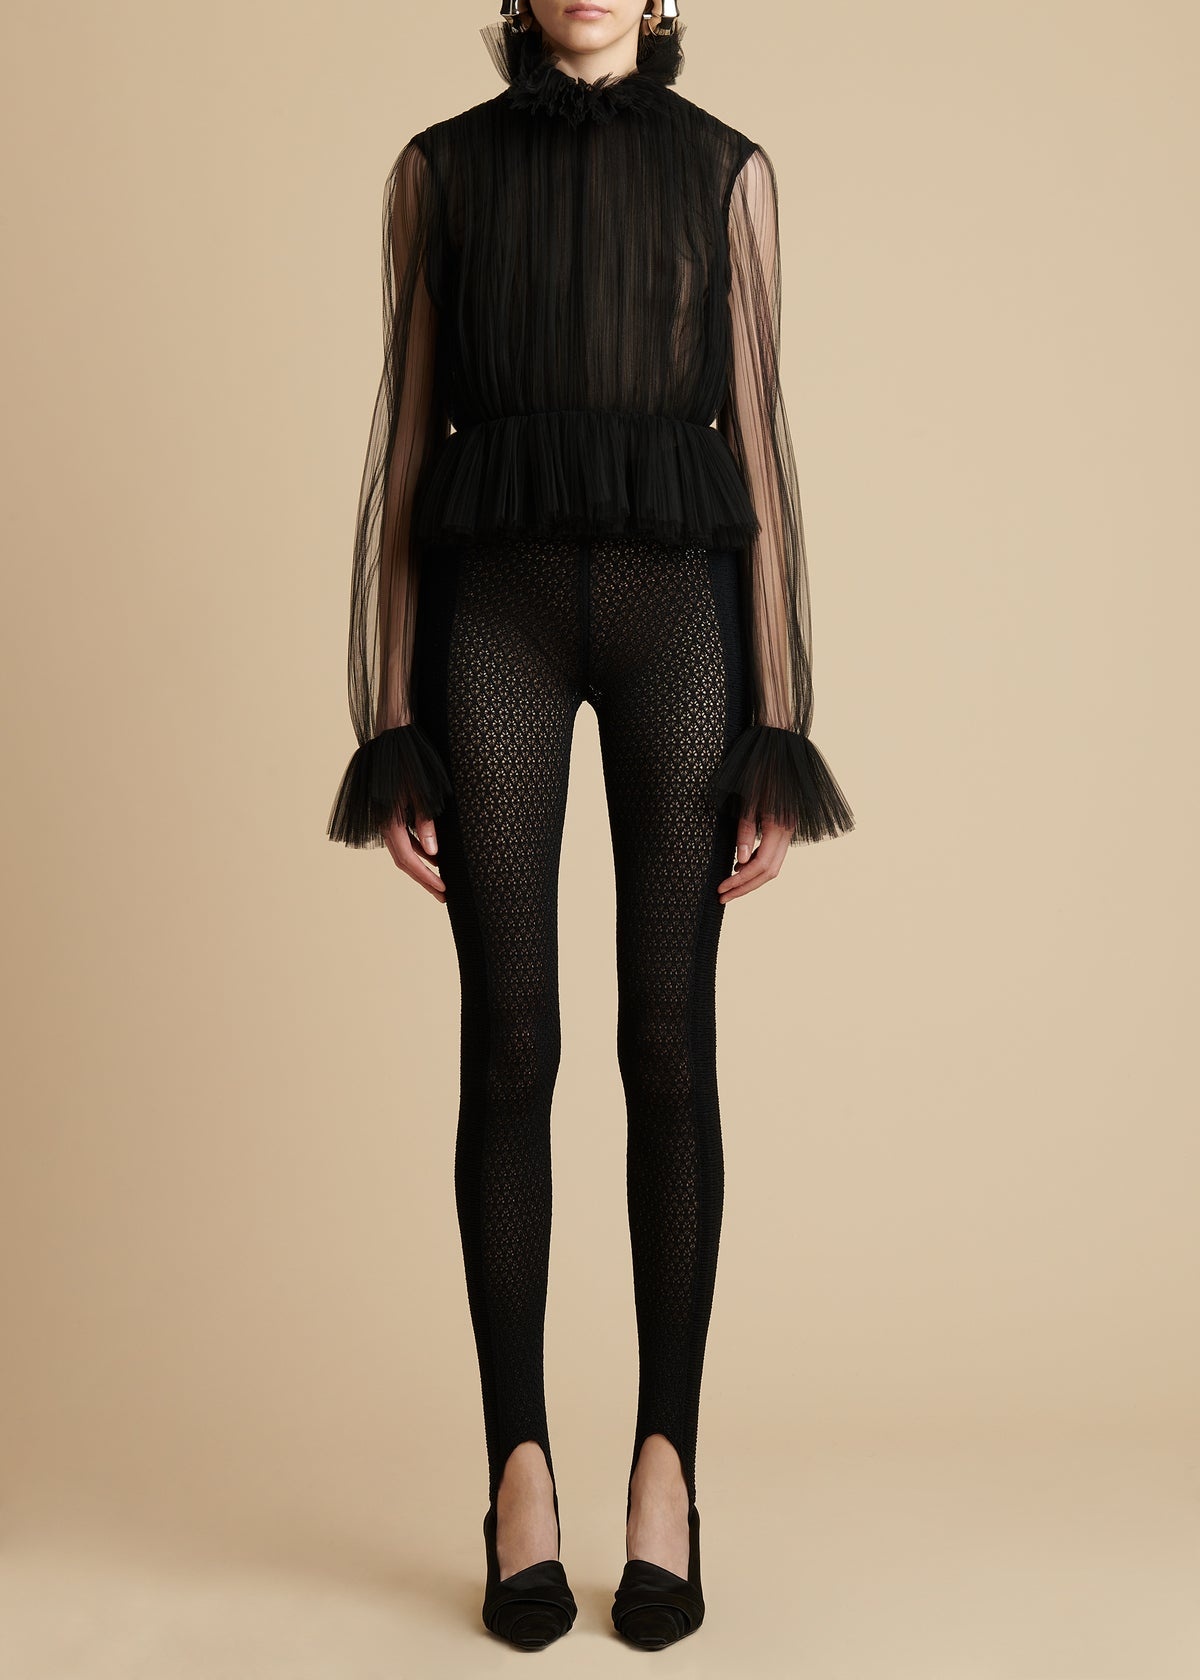 Lace stirrup leggings in black - Khaite